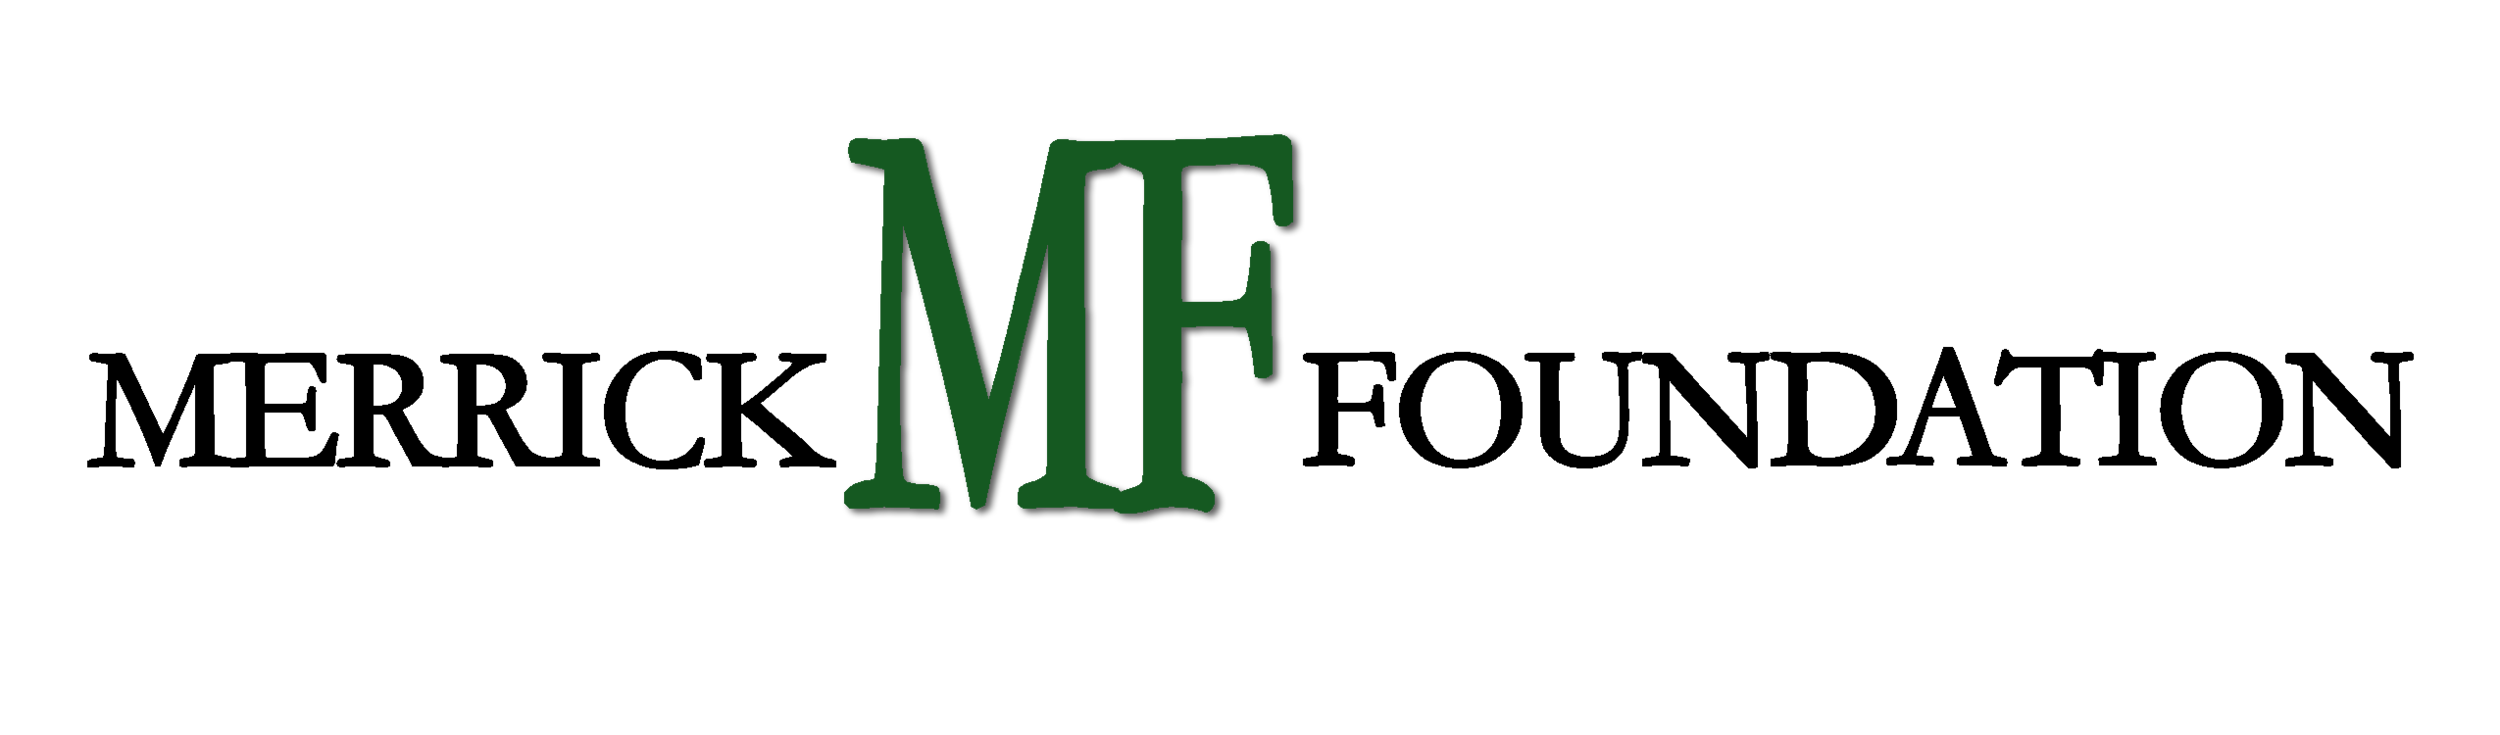 Merrick Fdn Logo.png